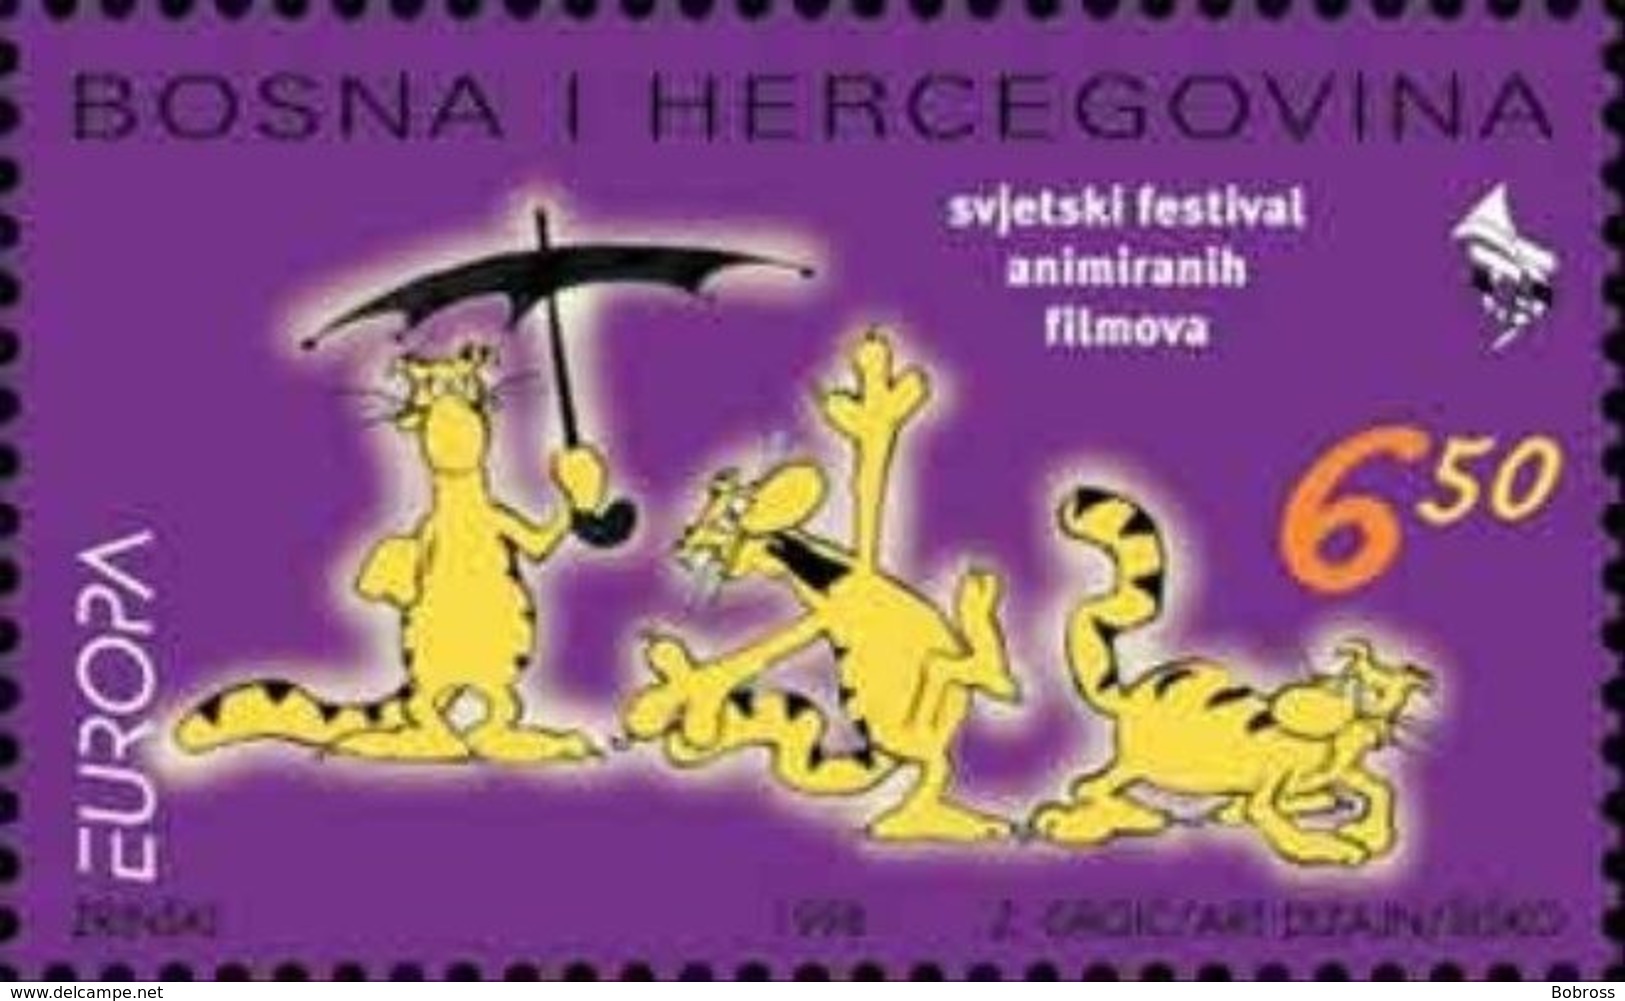 1998 EUROPA, World Festival Of Animated Films In Zagreb, N° 37, Croat Post Mostar, Bosnia And Herzegovina,MNH - Bosnië En Herzegovina